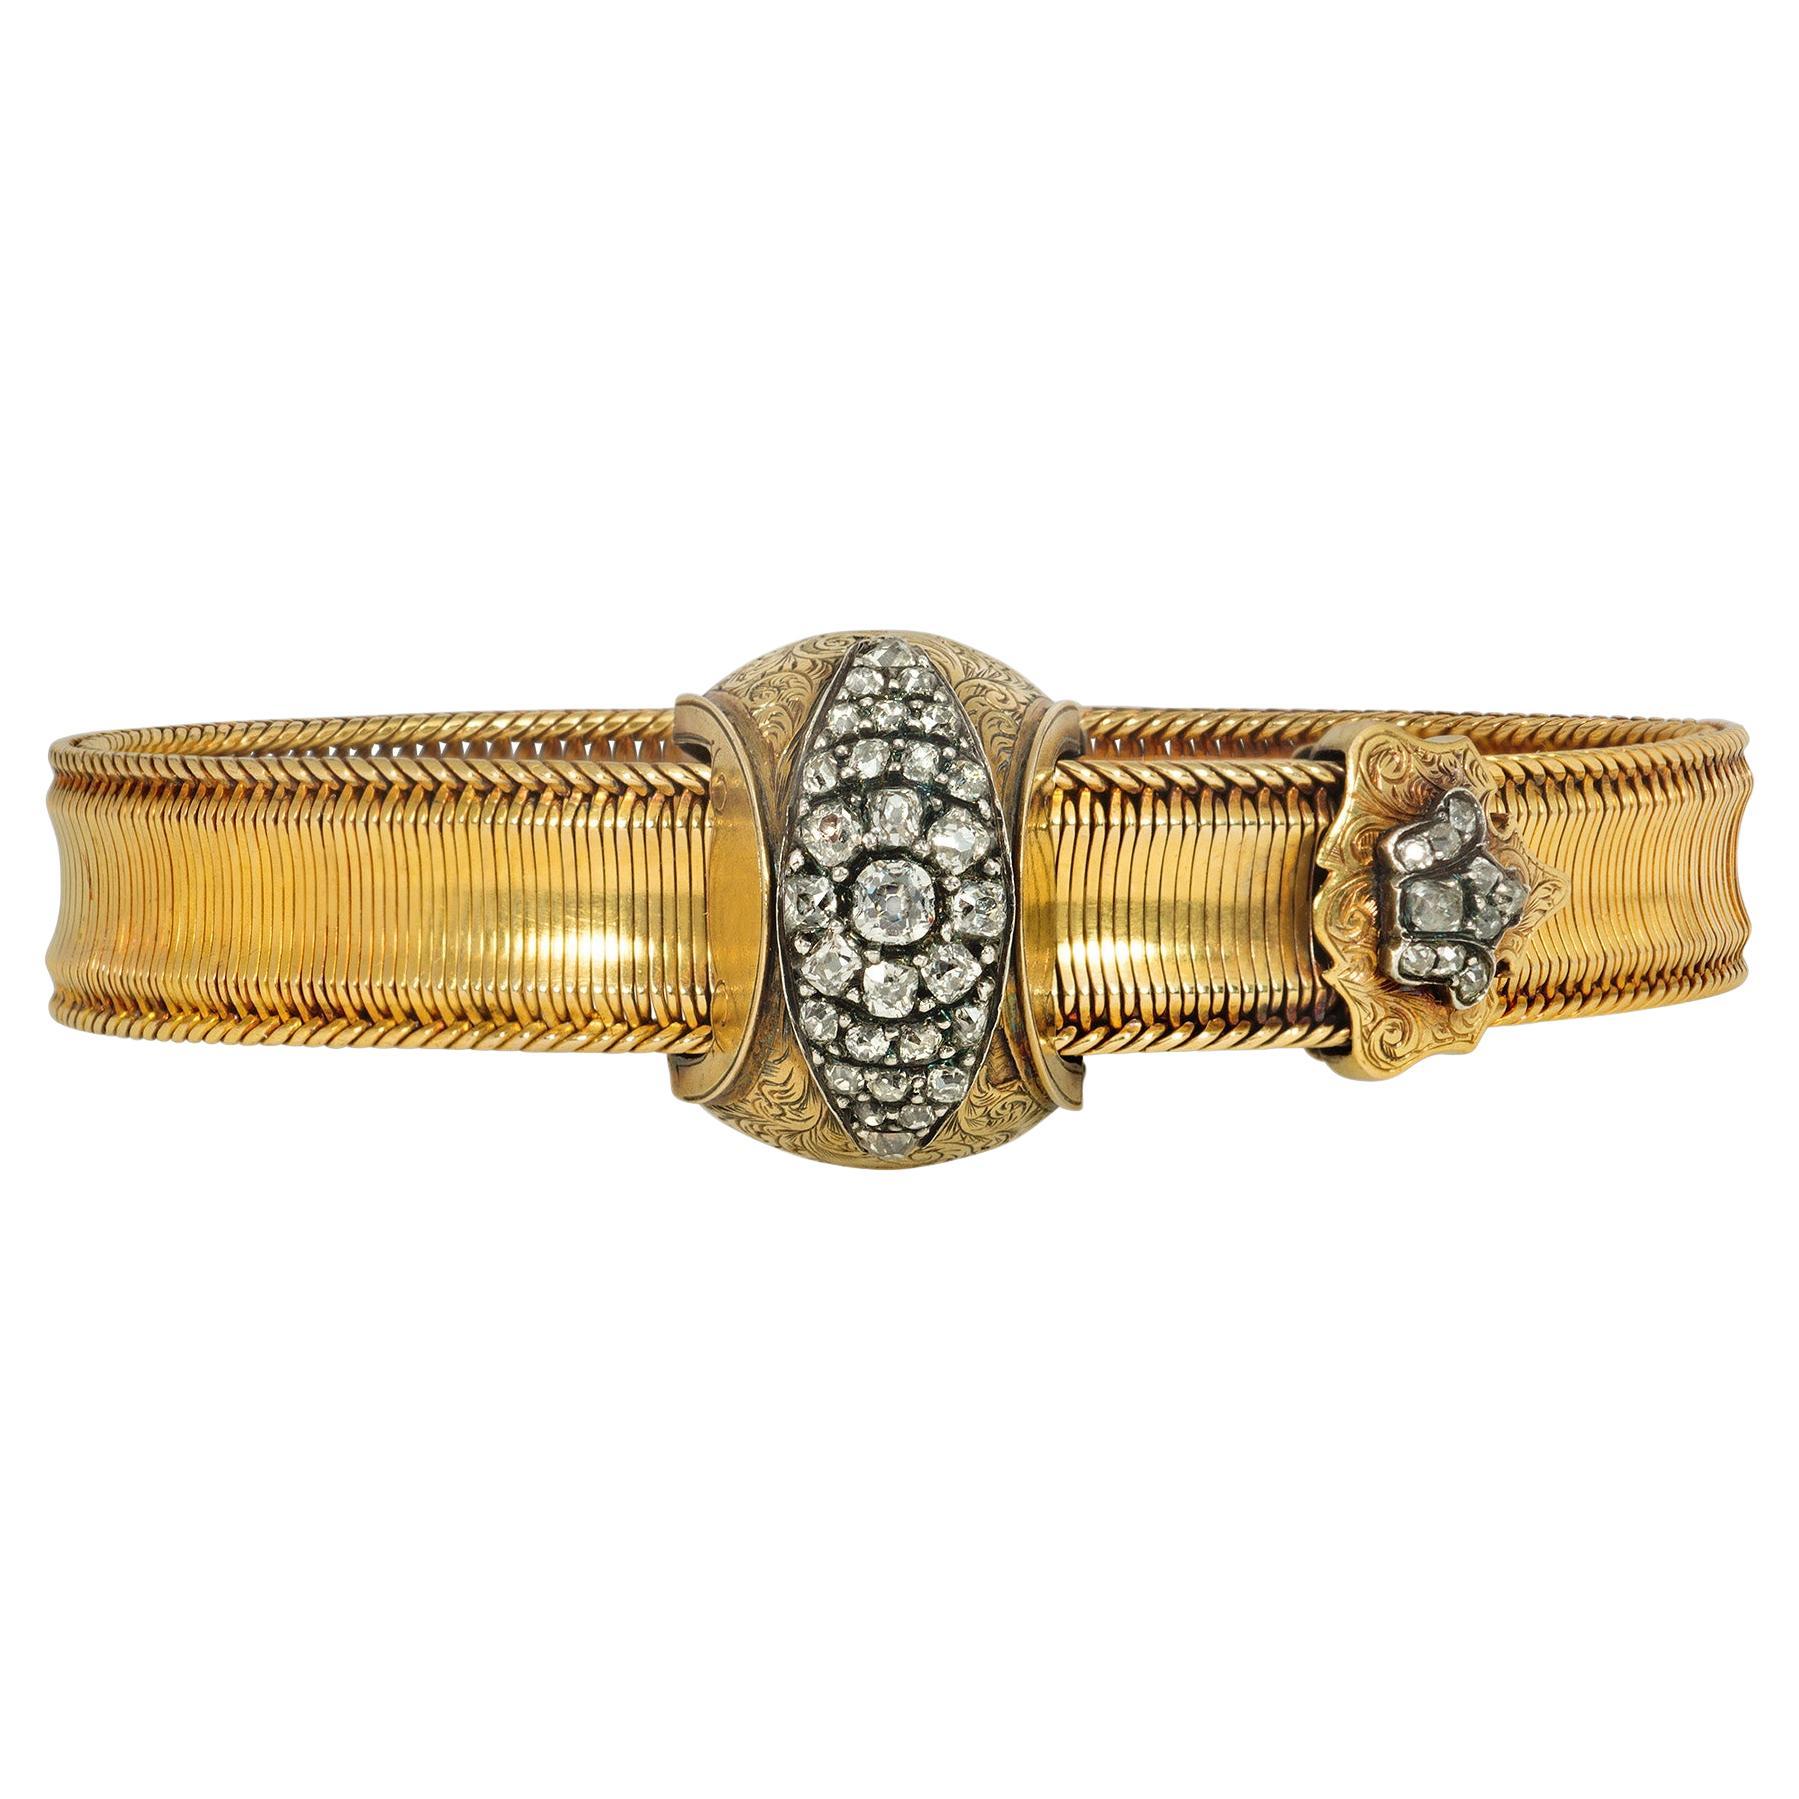 Antique Woven Gold and Diamond Jarretière Bracelet of Strap and Buckle Design